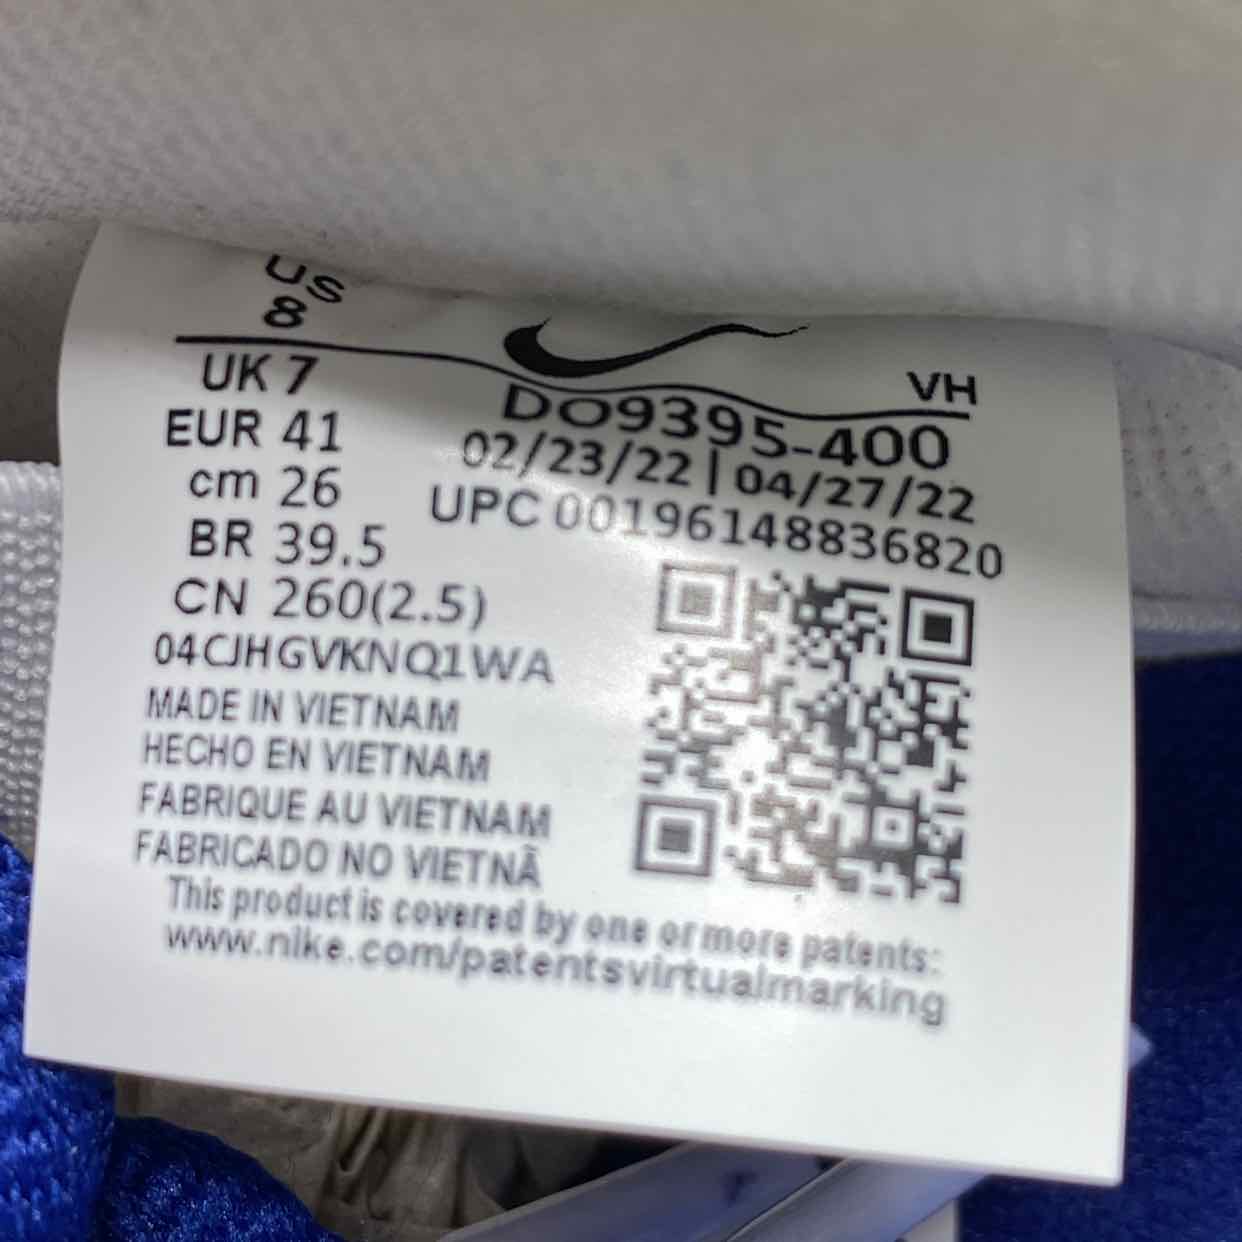 Nike SB Dunk Low "LA DODGERS" 2022 New Original Box Size 8